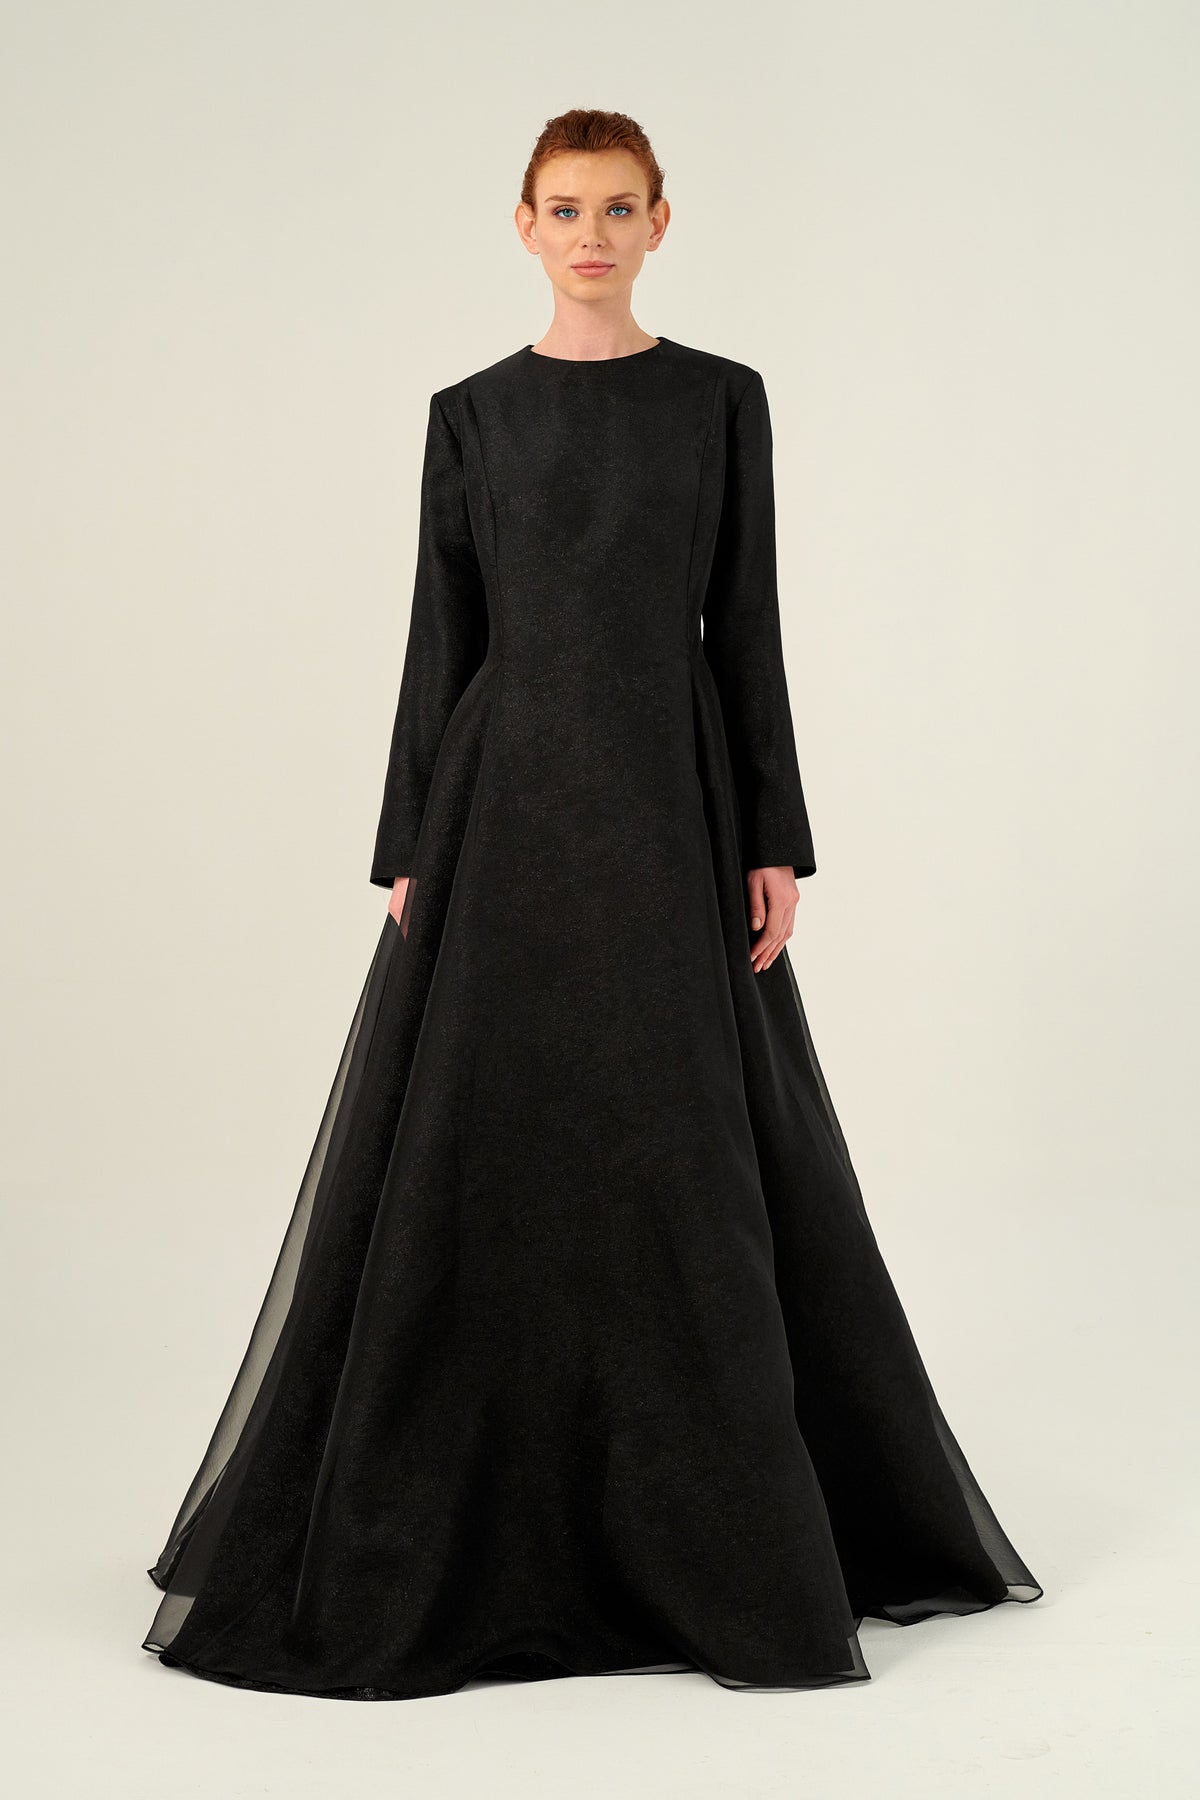 Luxury Muslim Black Evening Gown With Side Slit, V Neckline, And Long  Sleeves 2019 Islamic Dubai Saudi Arab Deep V Formal Dress From  Babydress001, $62.82 | DHgate.Com